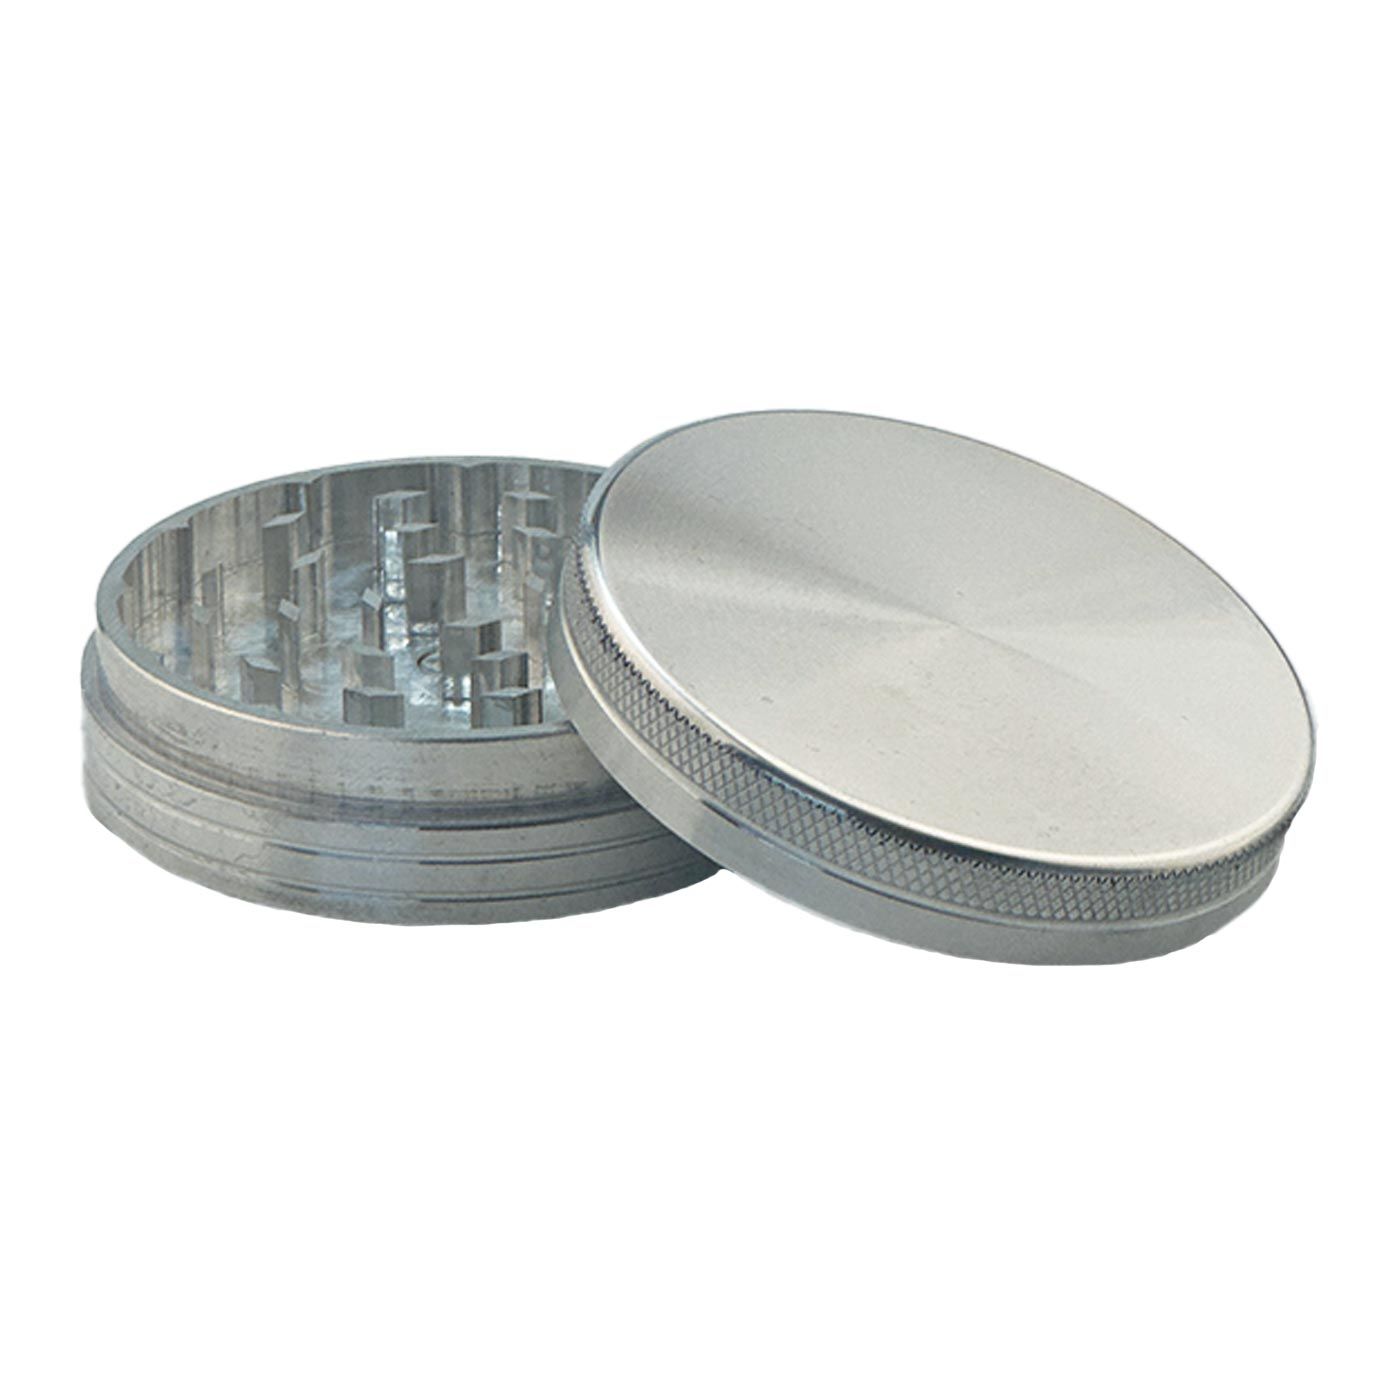 Aluminum Grinder 2 Parts 63 mm Silver